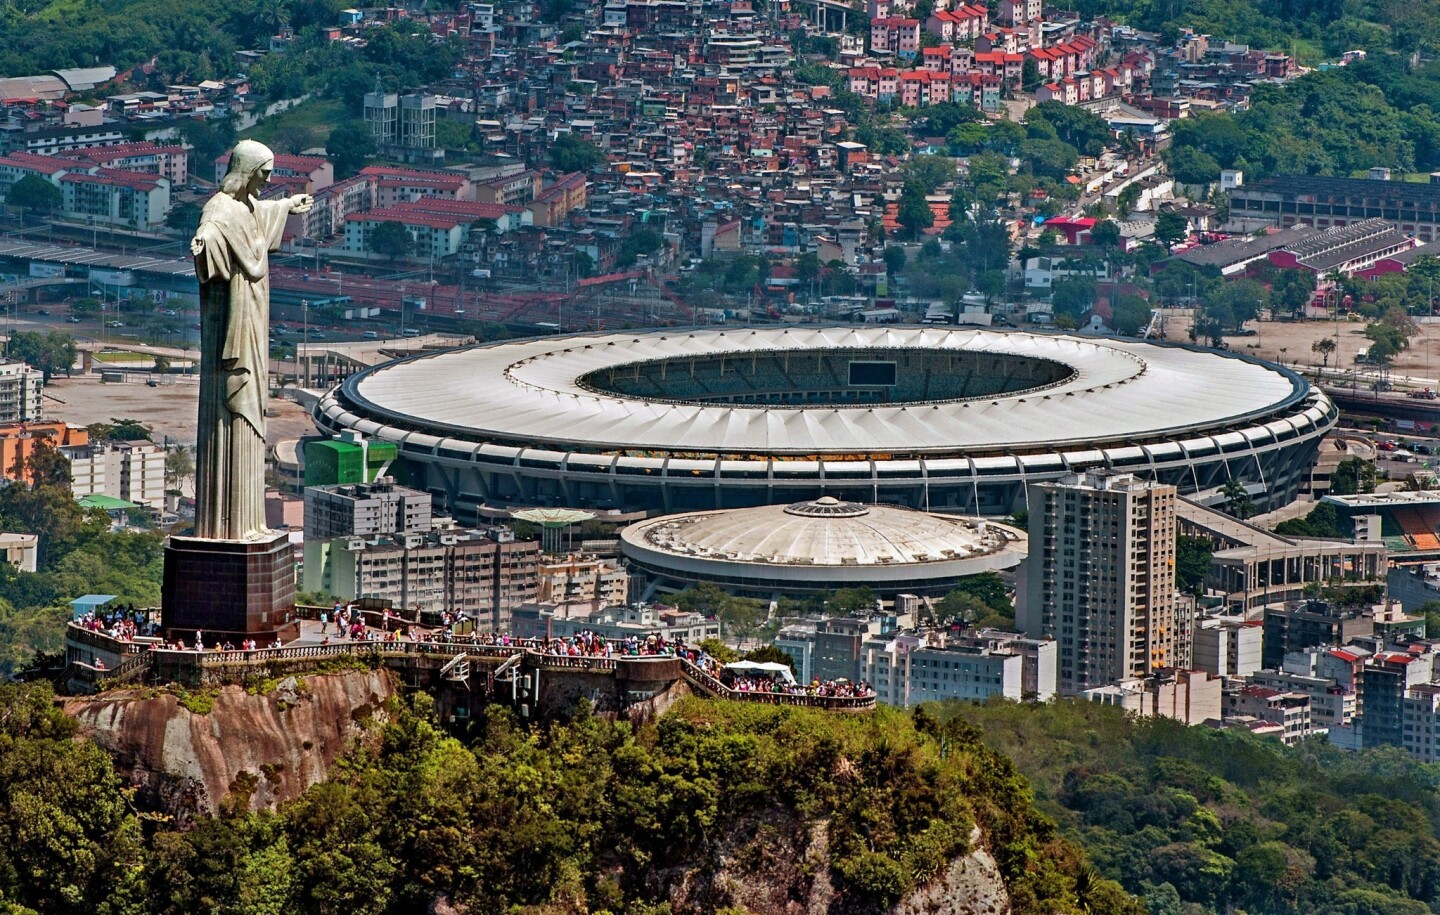 A statue of Christ the Redeemer atop Corcovado overlooks the Mário Filho (Maracanã) stadium in Rio de Janeiro. The Maracanã stadium will host both the Brazil 2014 FIFA World Cup and the 2016 Summer Olympics.